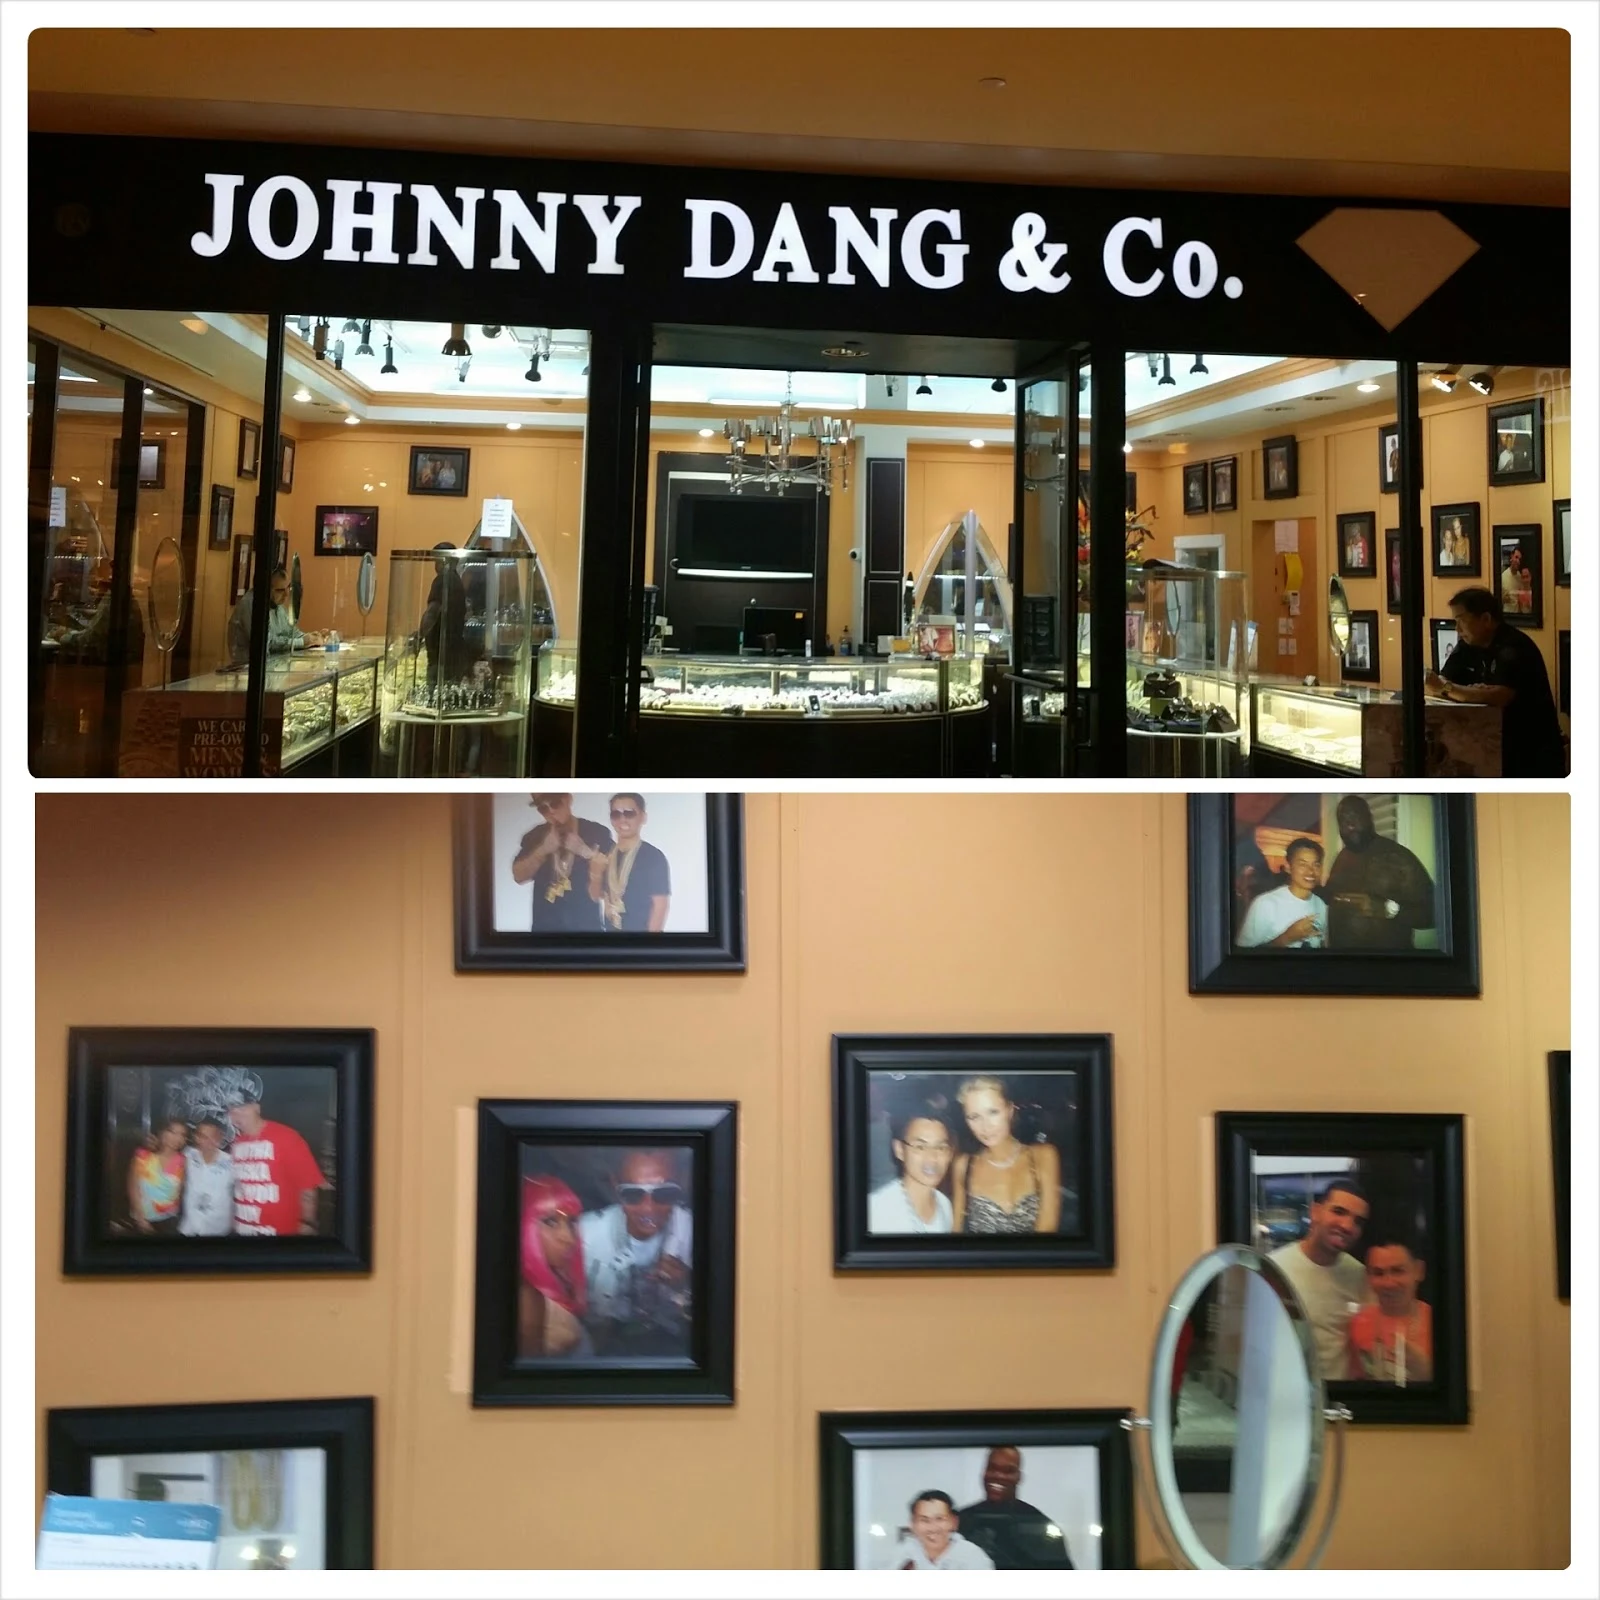 My Epic Family Road Trip Vacation! #RoadTrip #JohnnyDang via ProductReviewMom.com